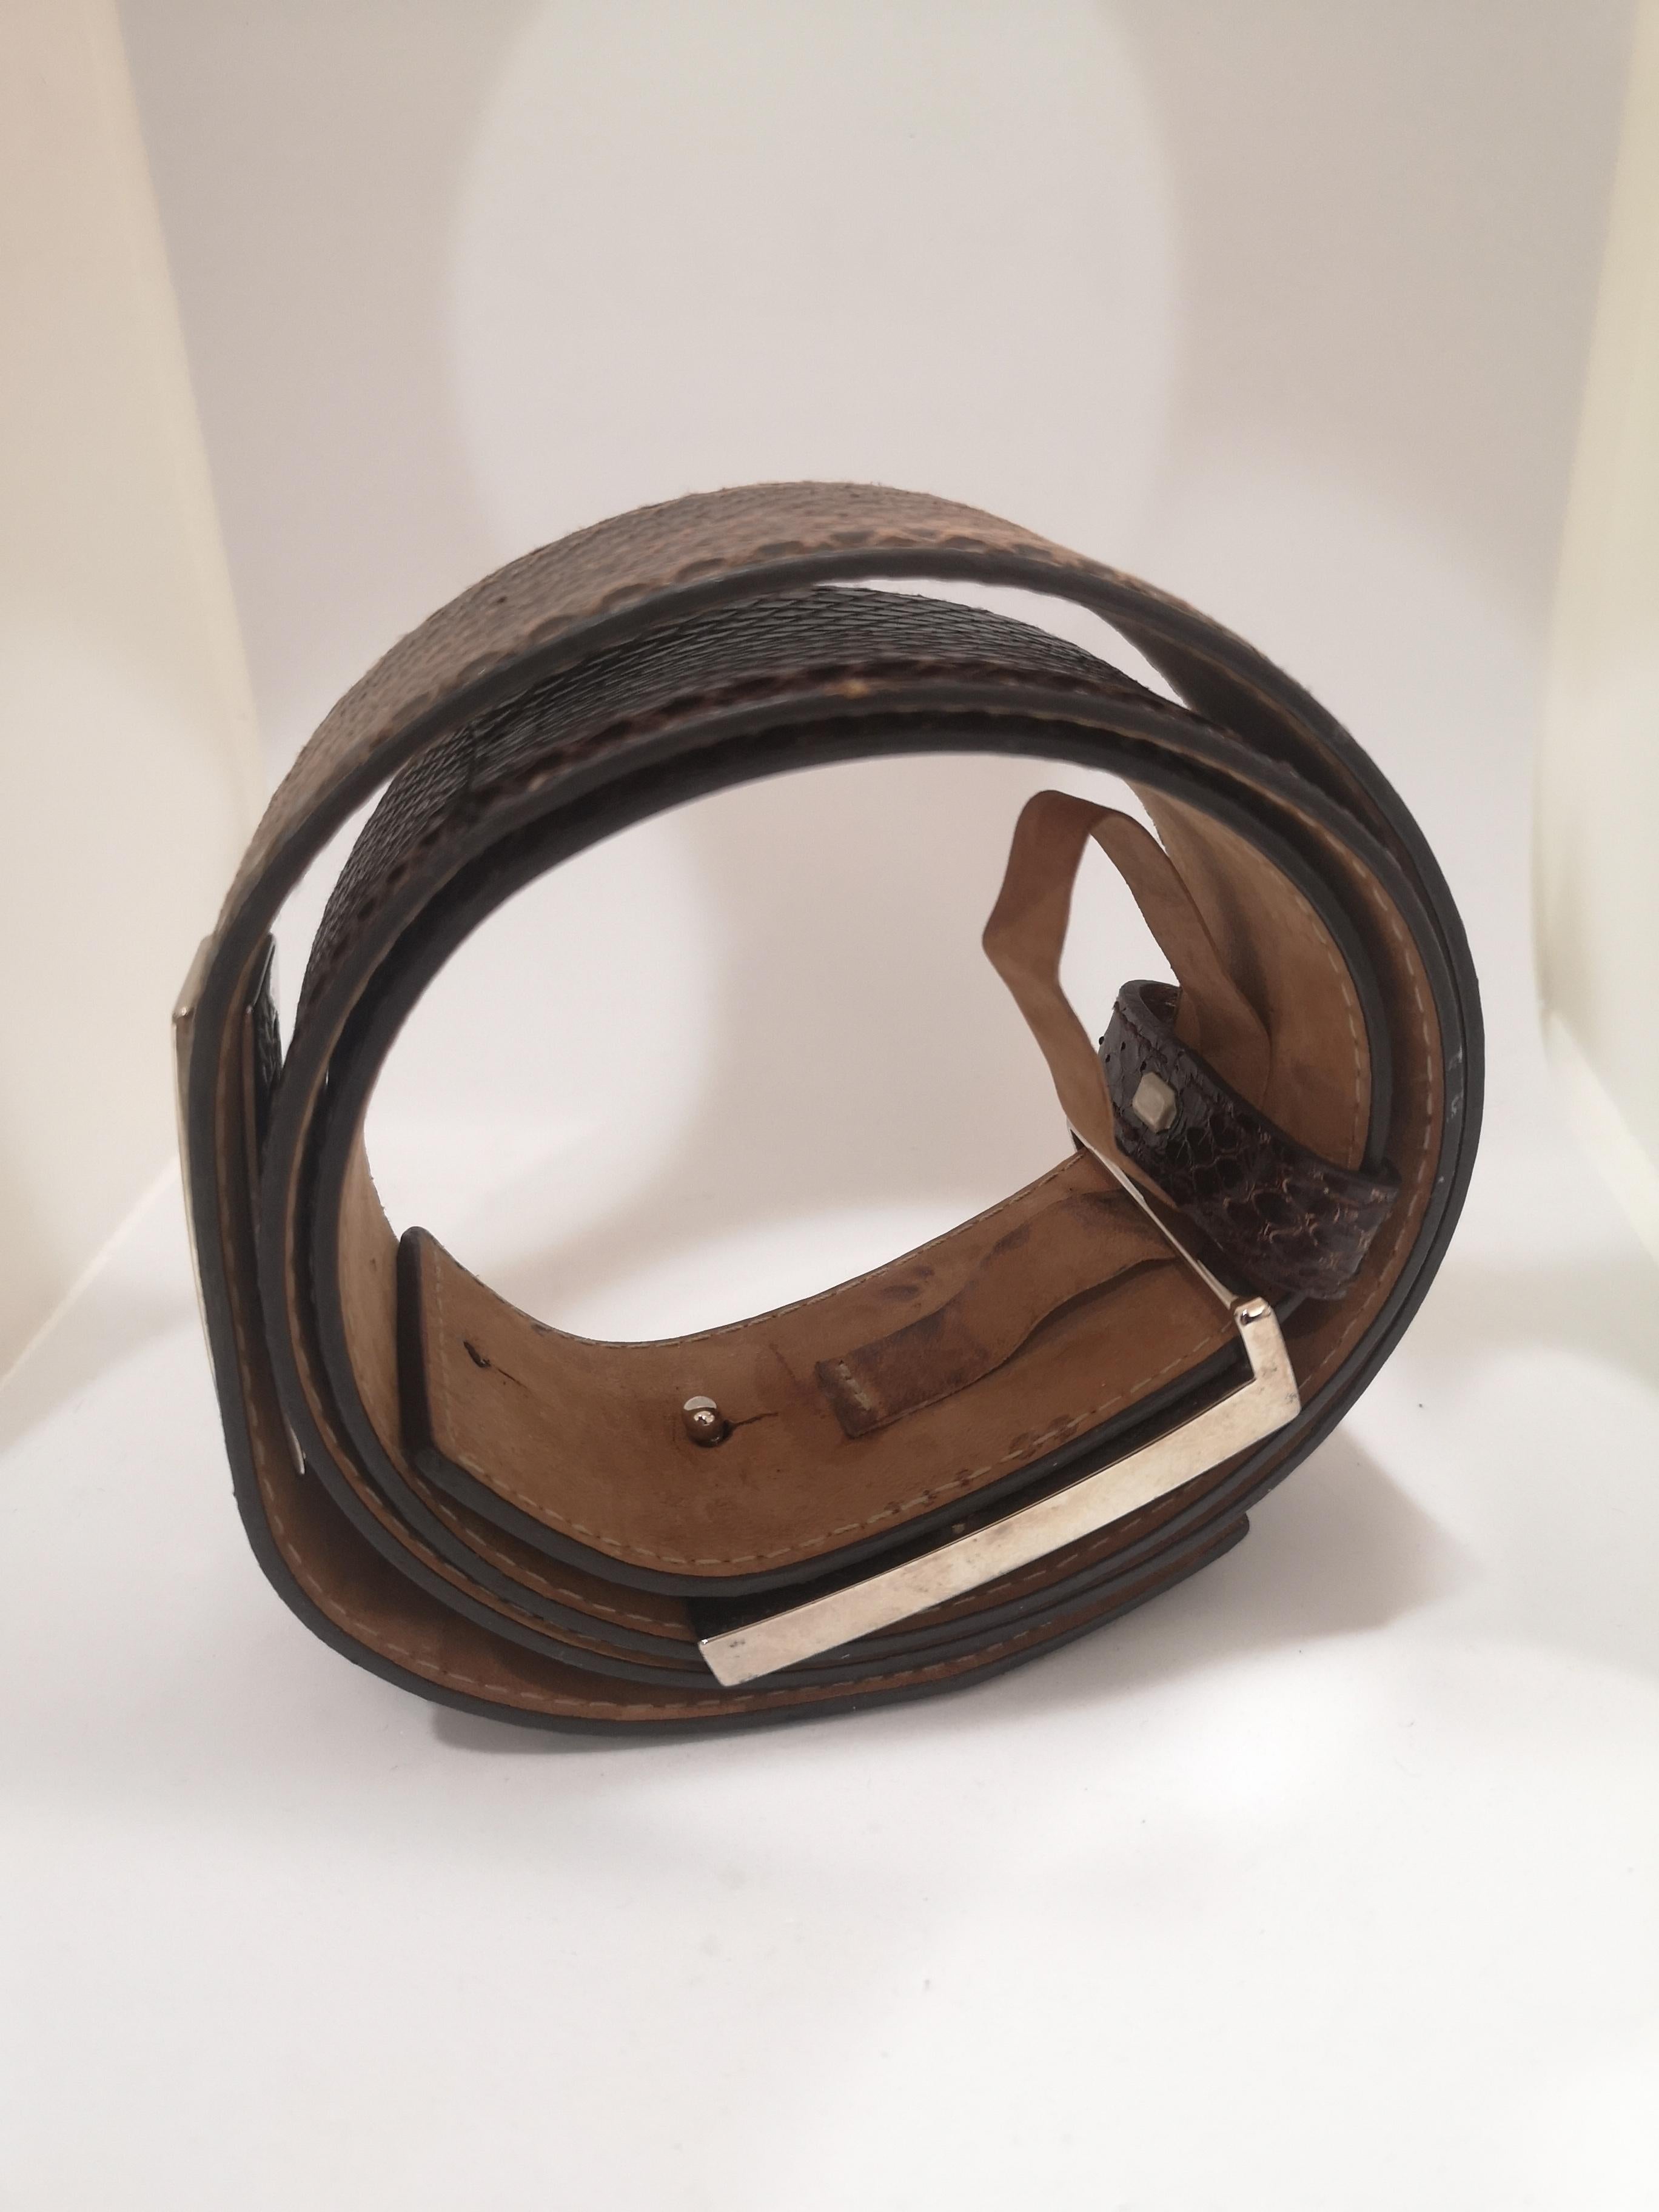 d&g leather belt